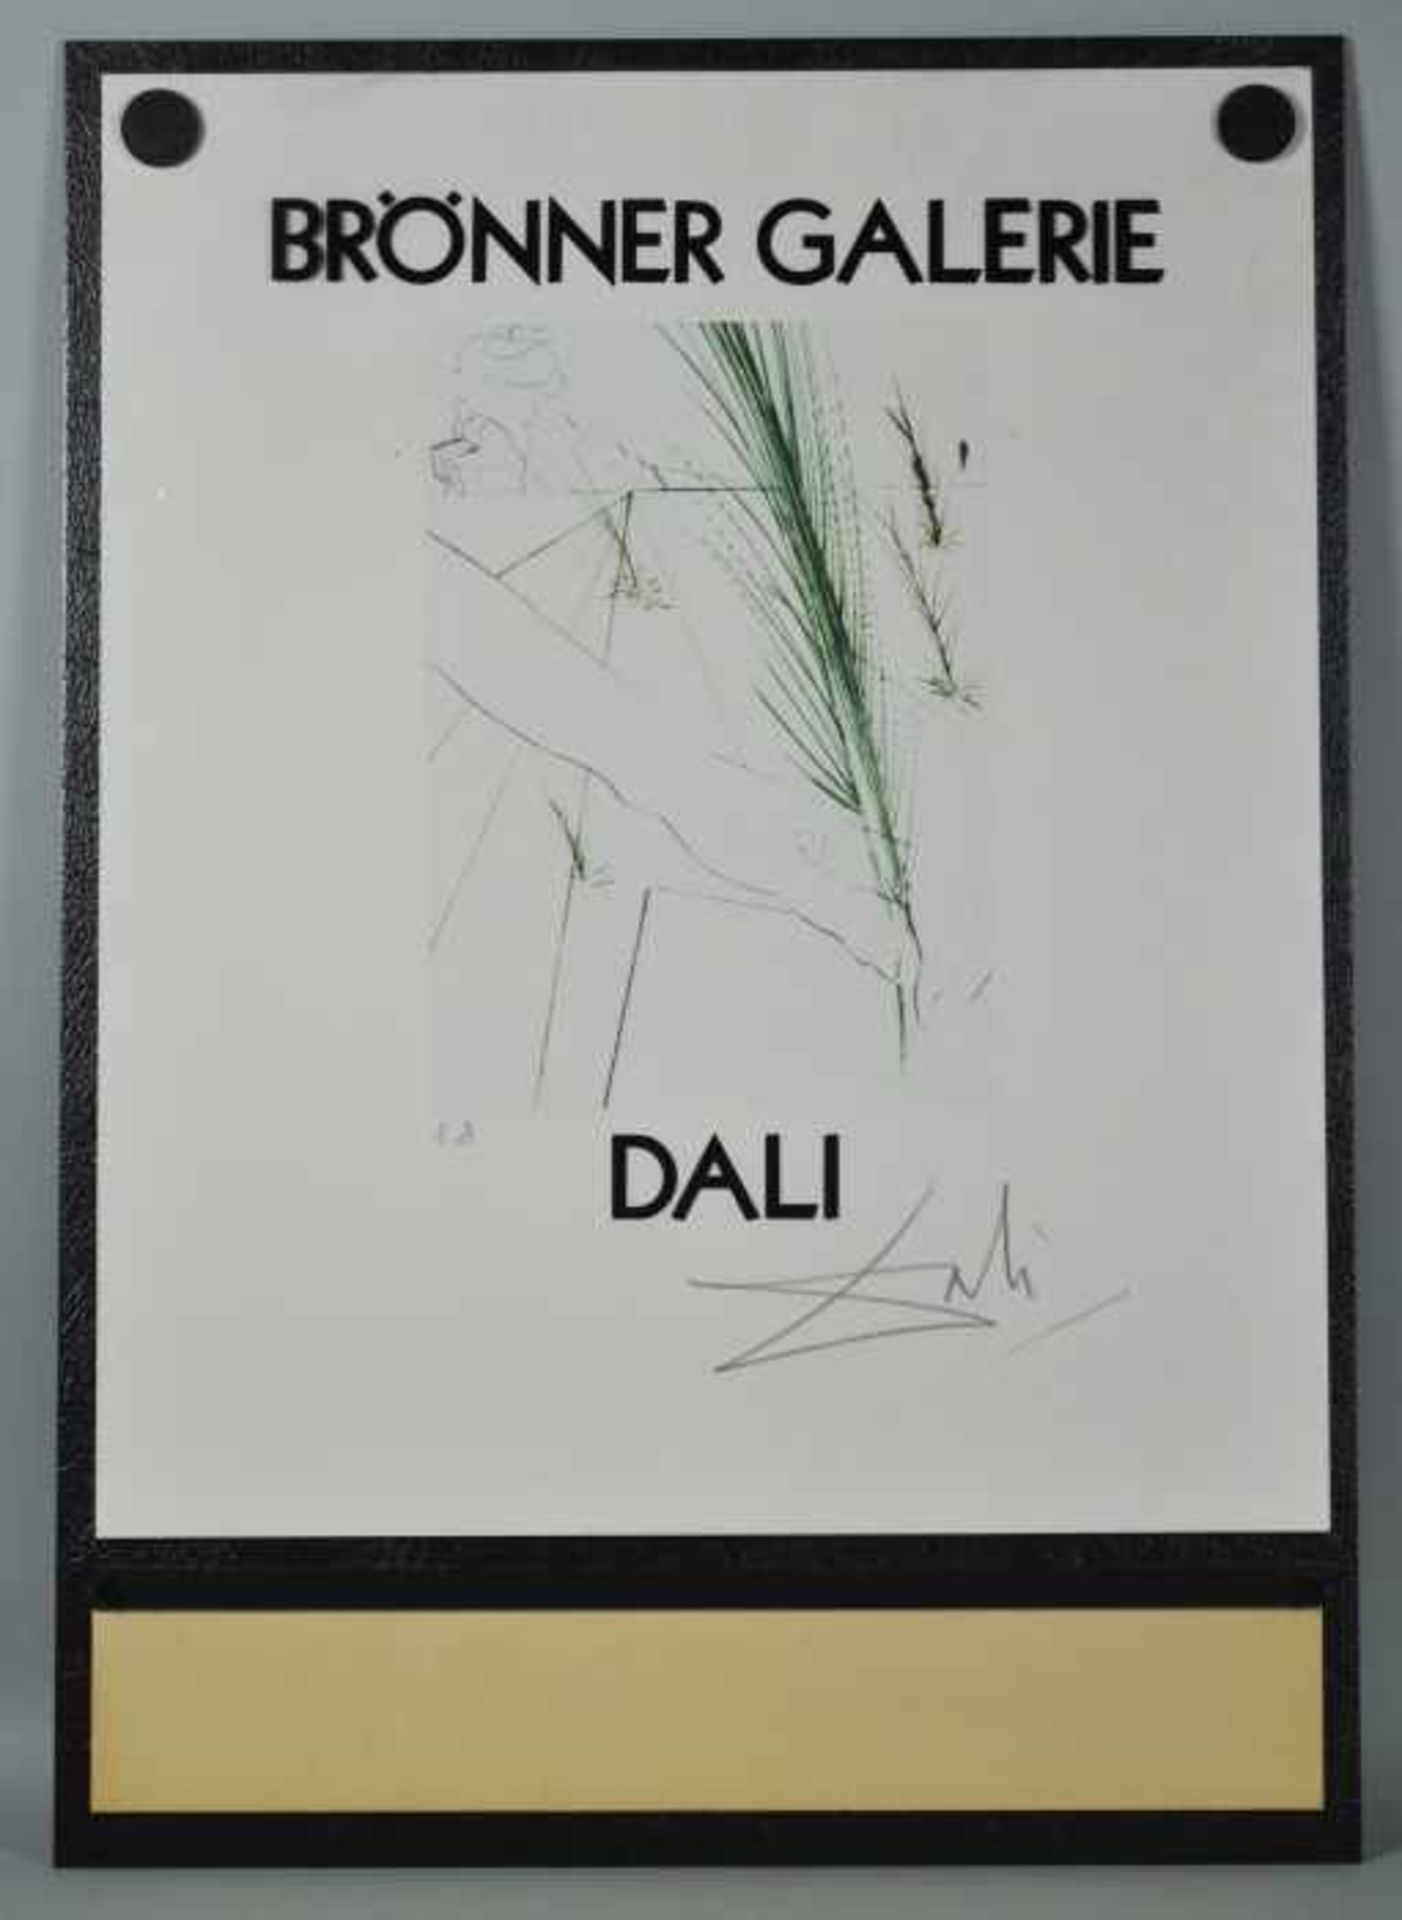 KUNSTKALENDER "Viel Lärm um Shakespeare", Salvador Dali, gedruckt v.Brönner Galerie, Frankfurt, 12